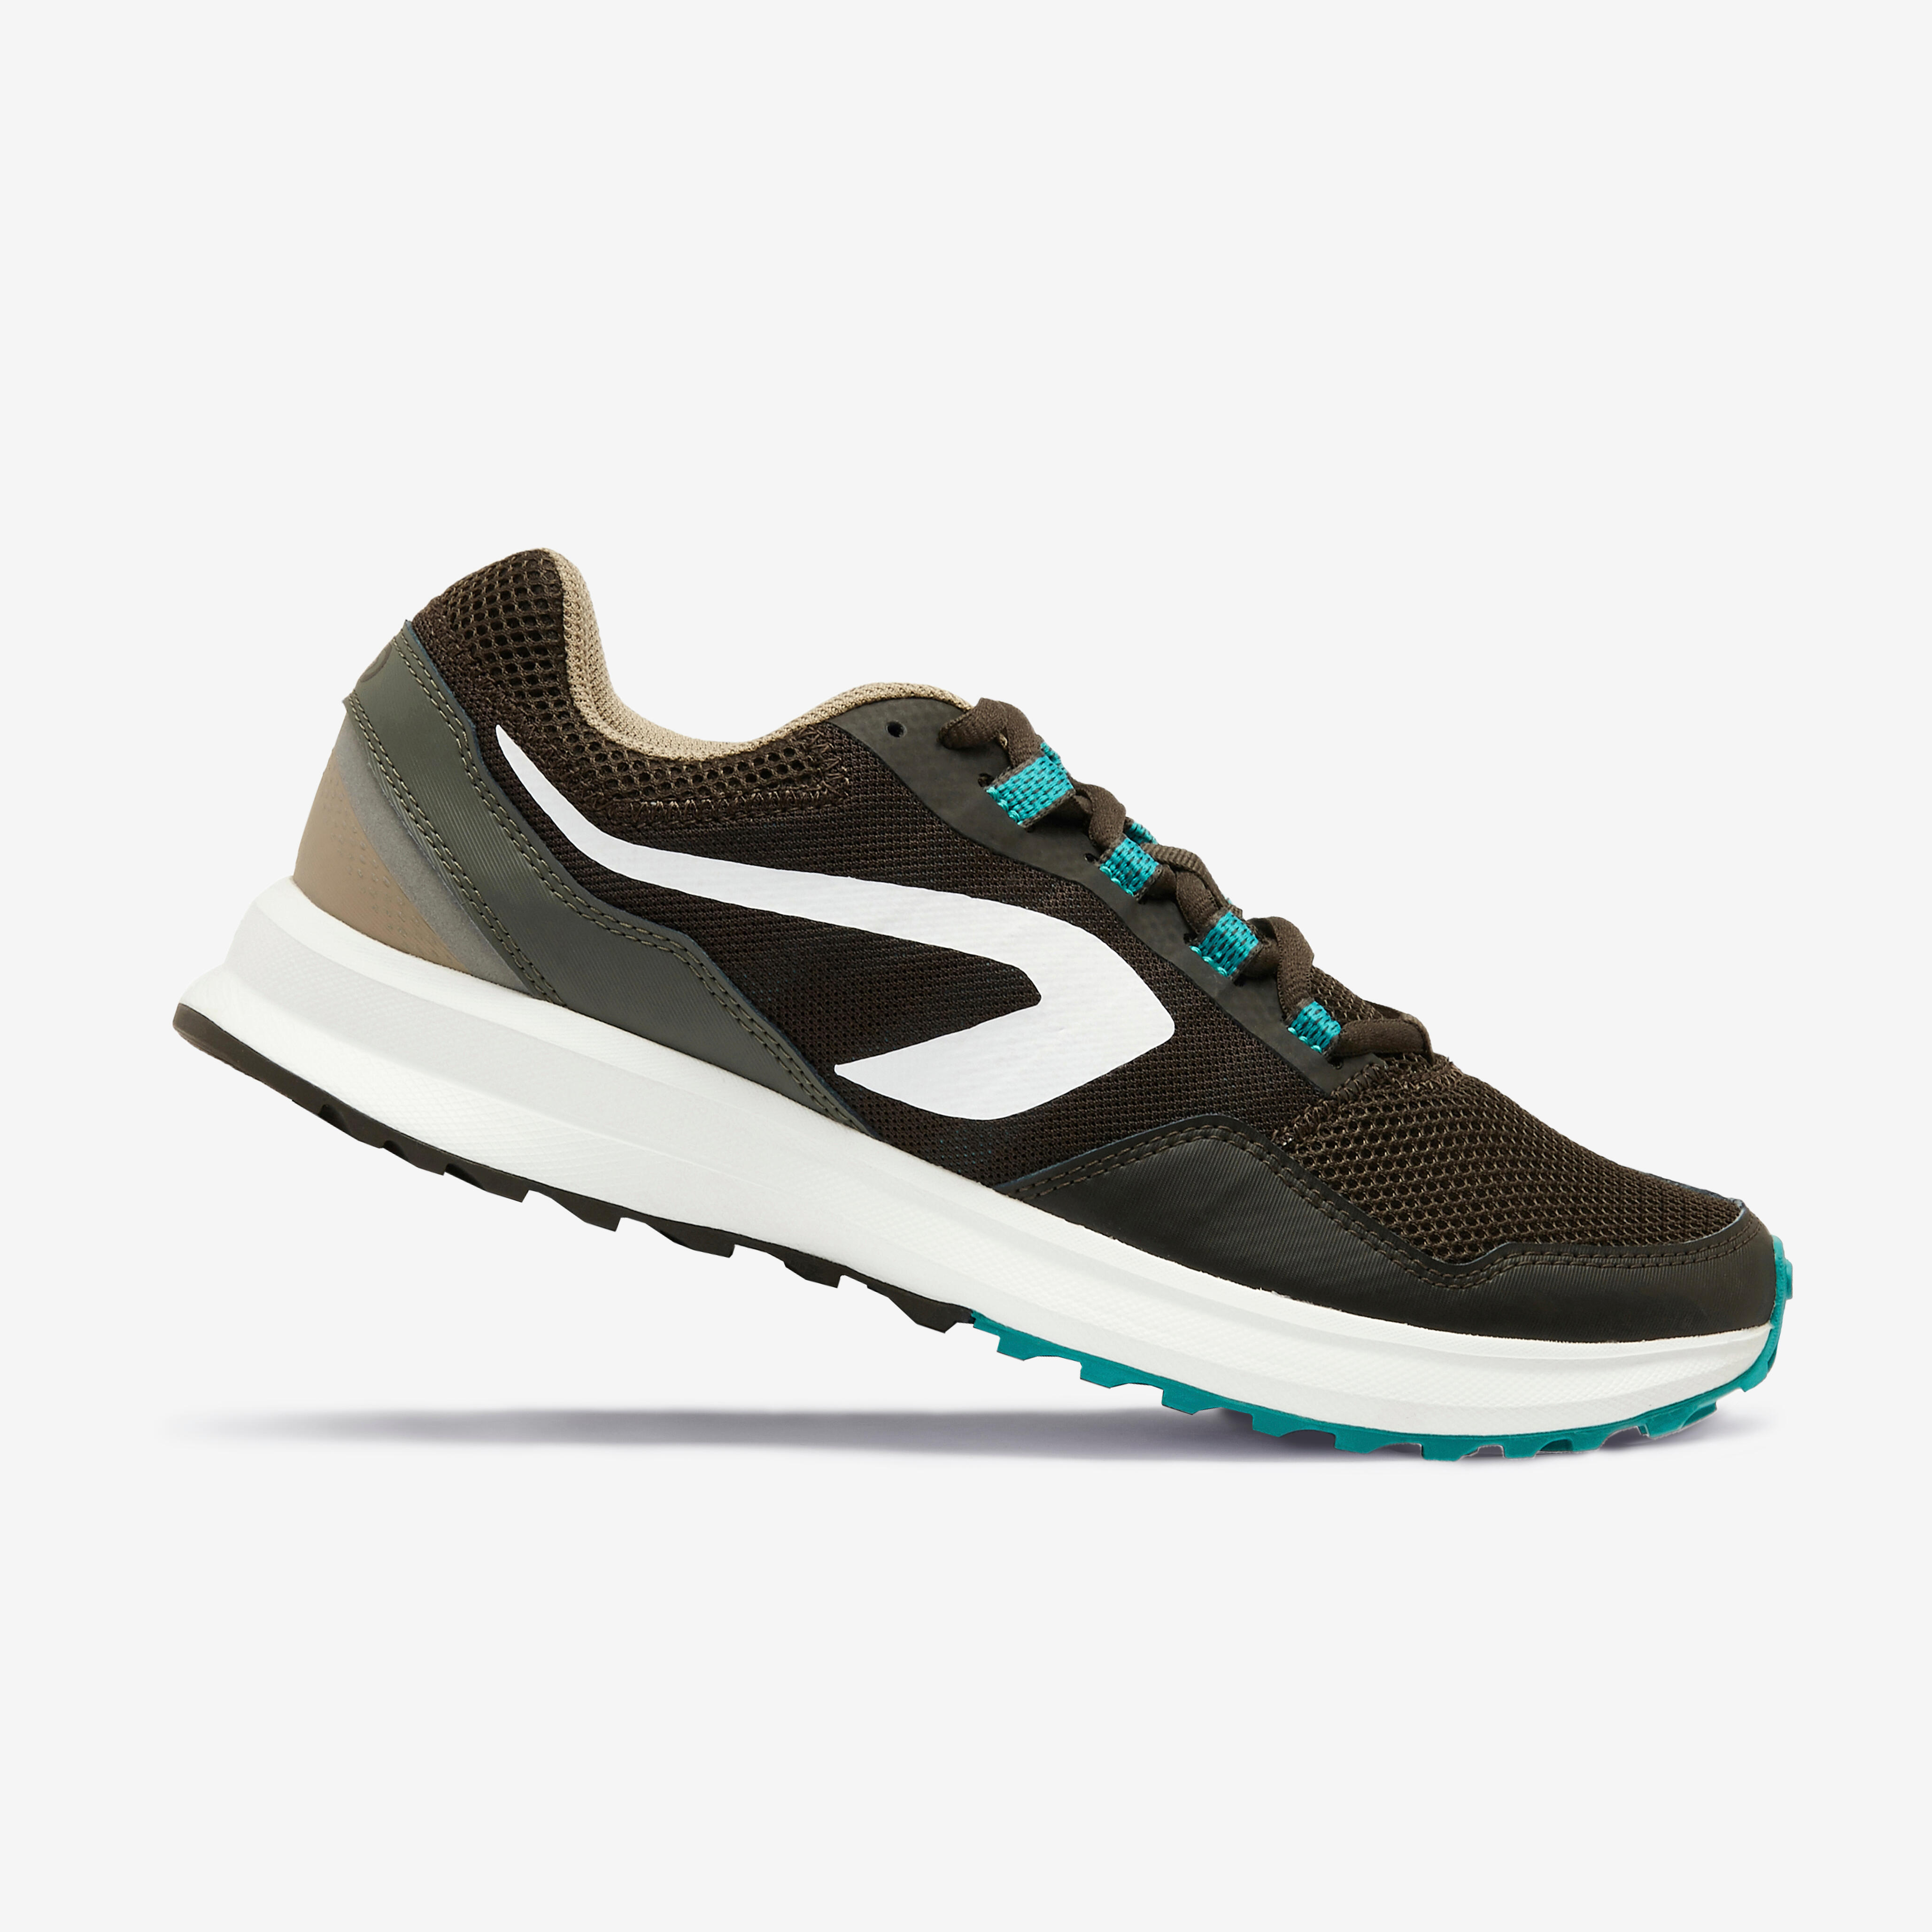 Buy Men's Trail Running Shoes TR - Night Blue Online | Decathlon